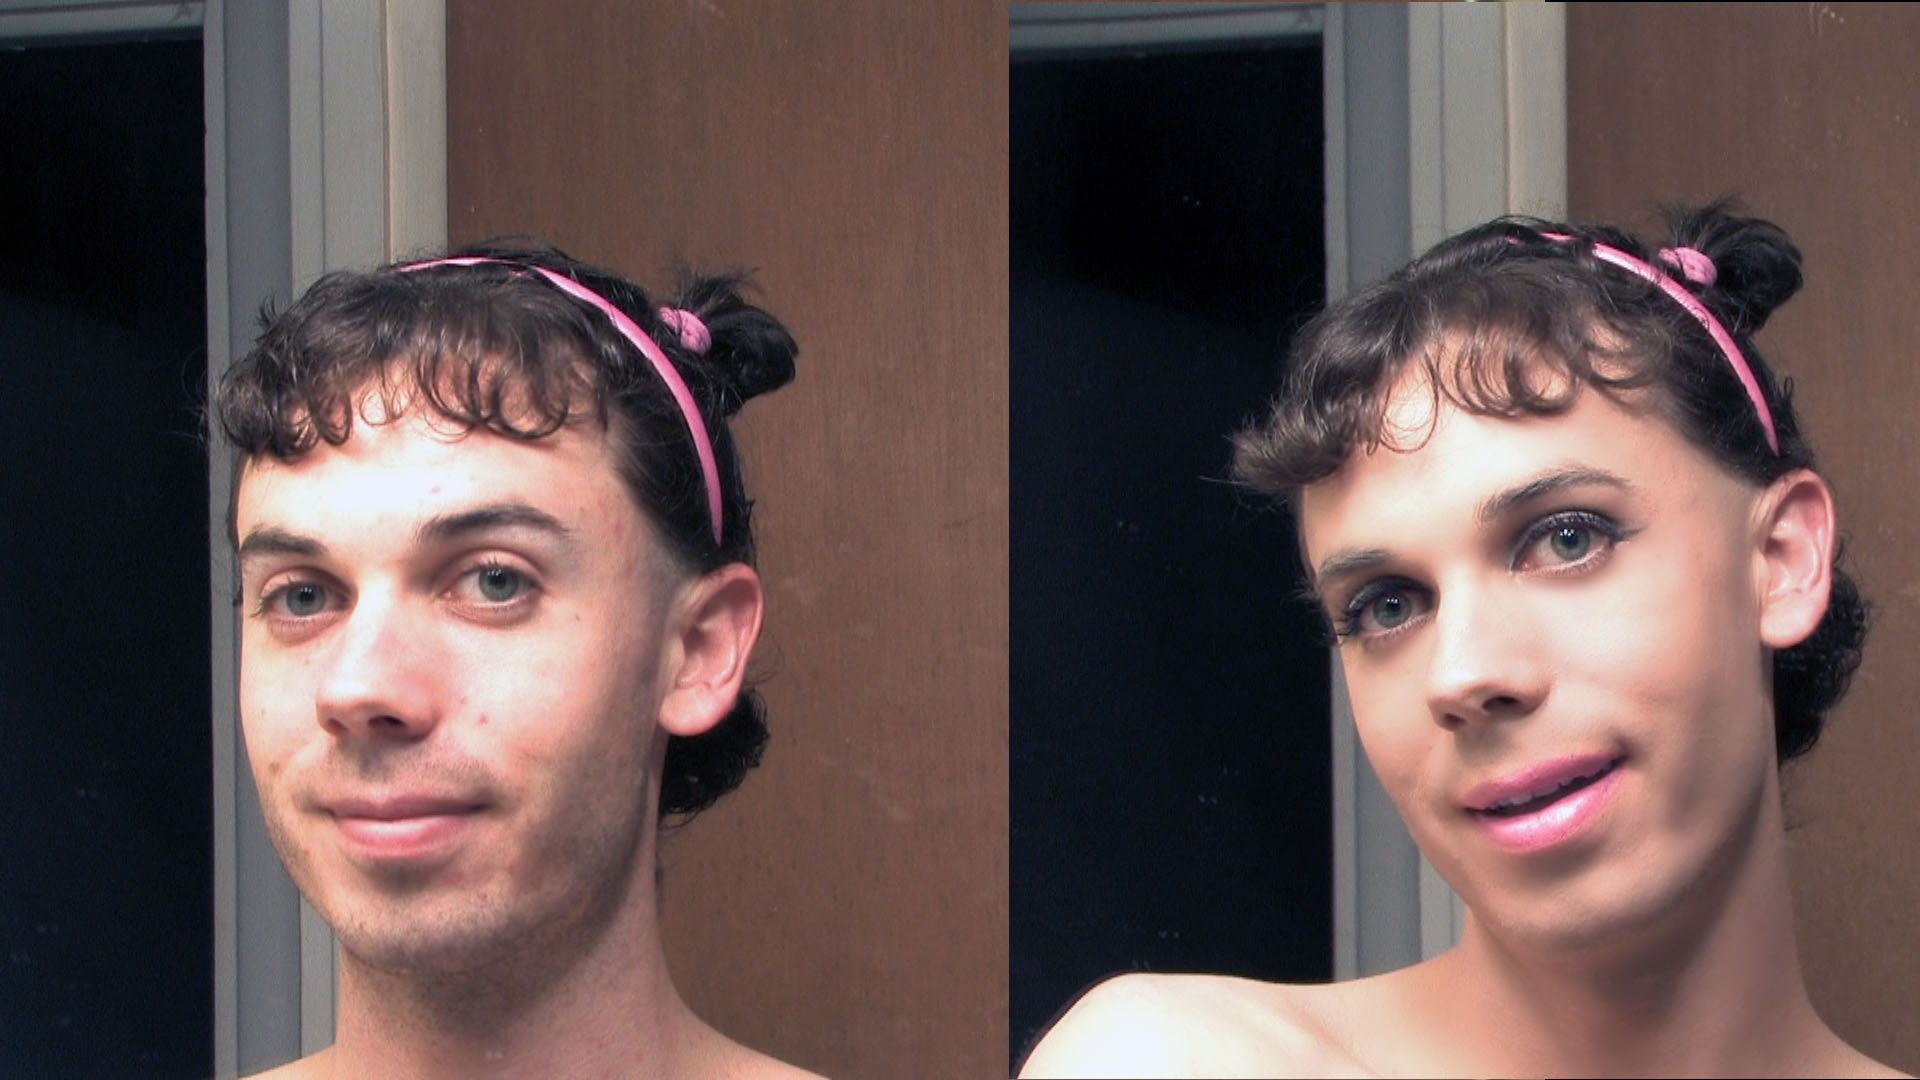 Crossdresser Makeup Before and After